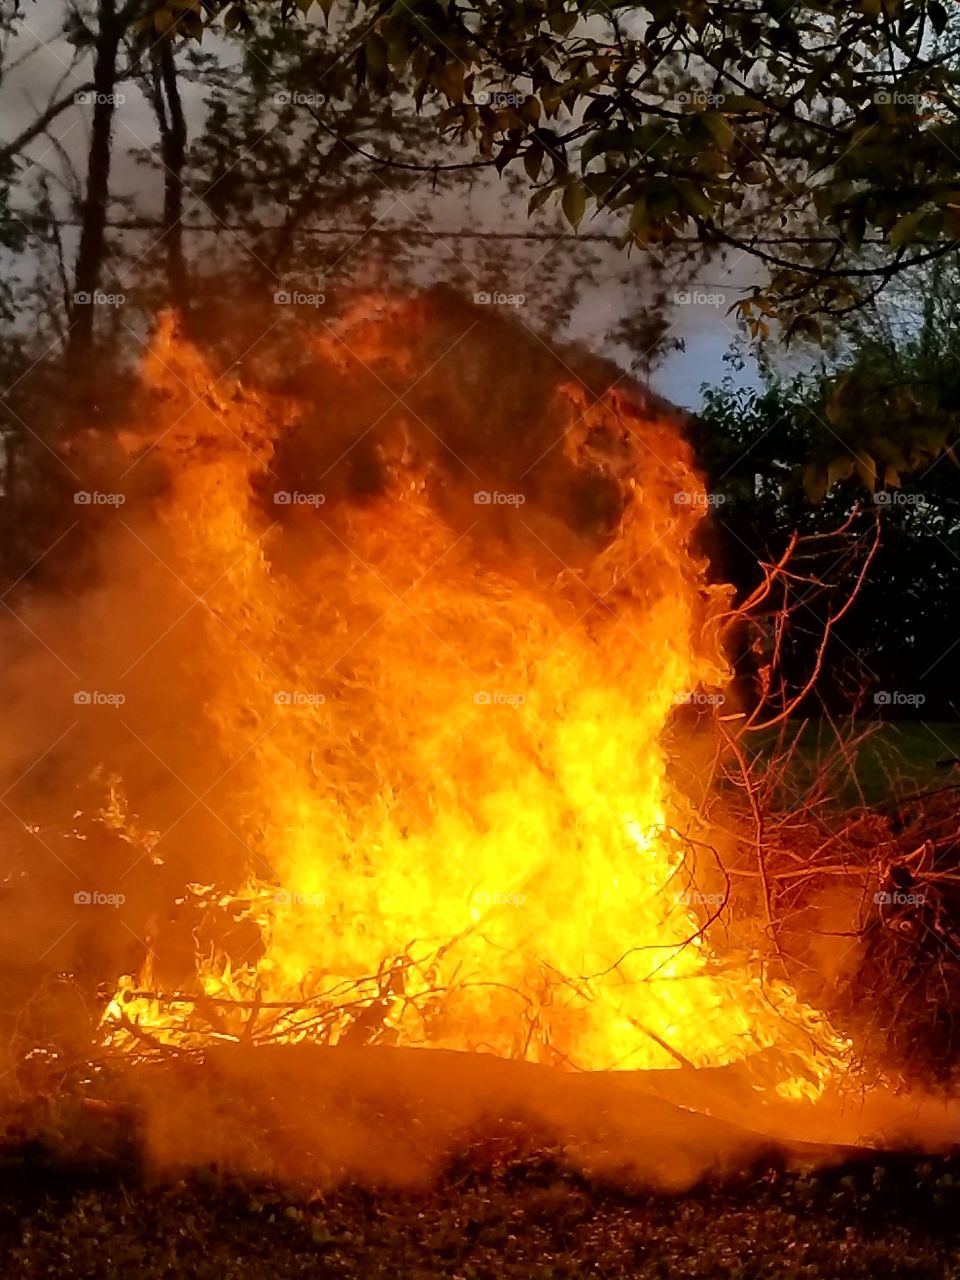 Bonfire in the backyard,  legally burning yard debris